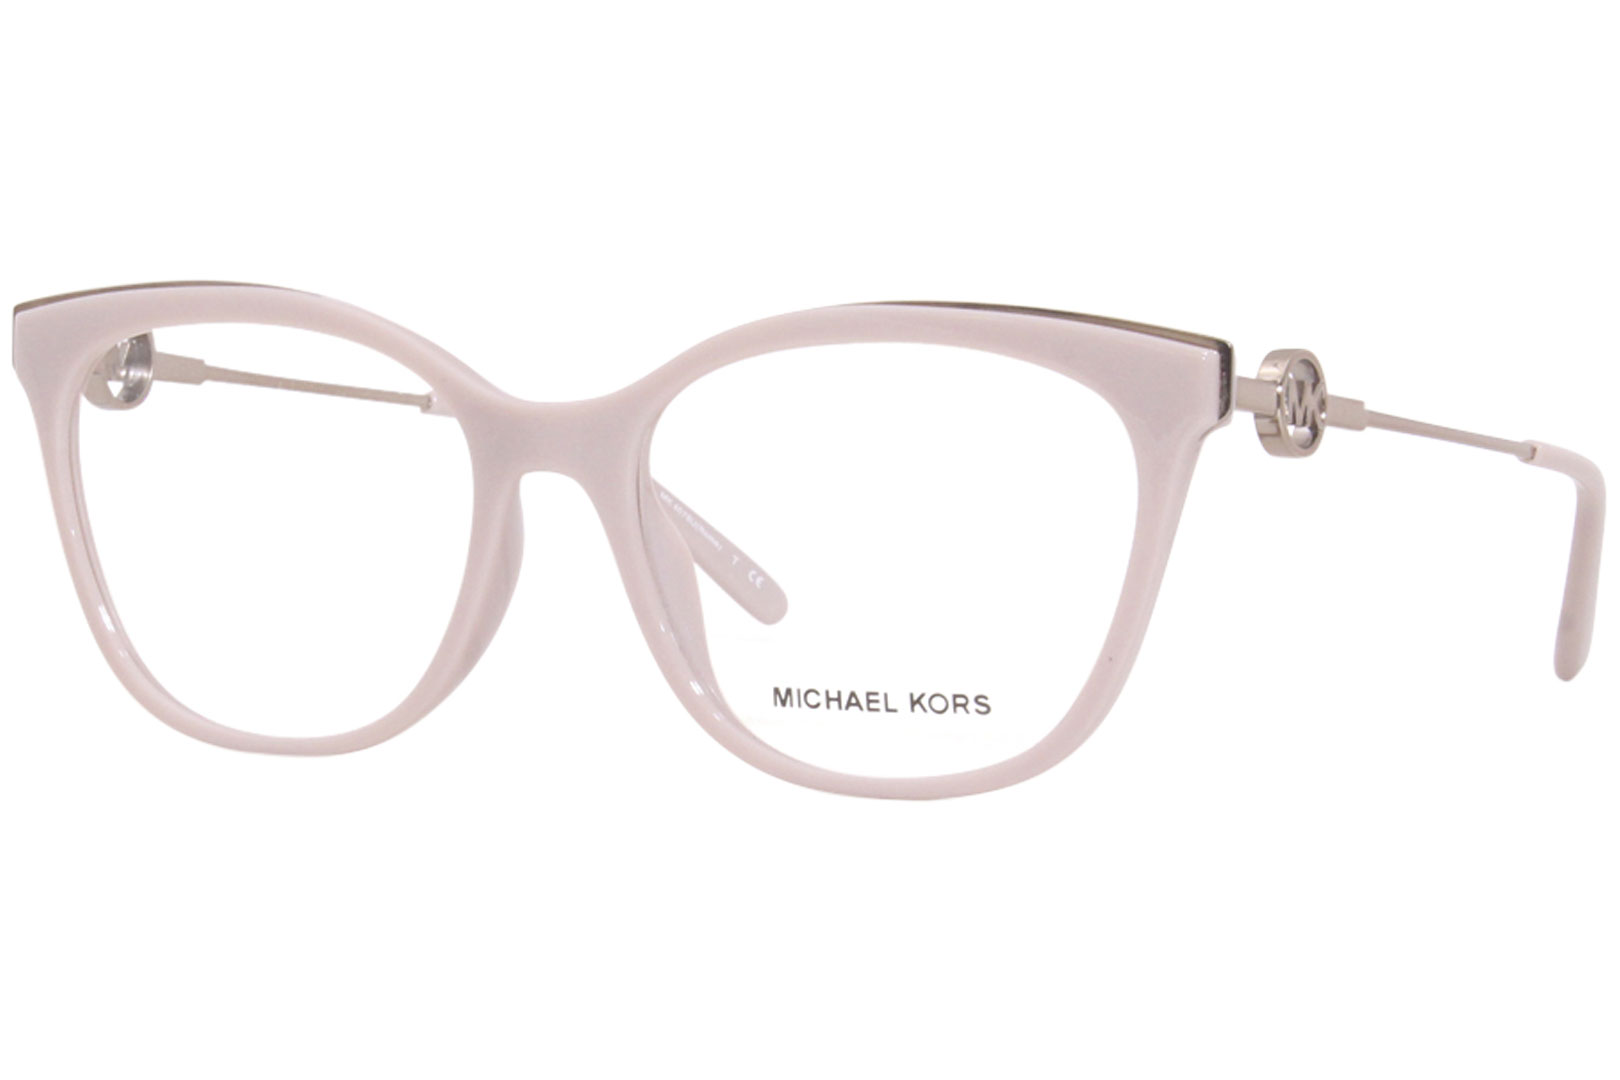 Amazoncom Michael Kors SANTA CLARA MK4067U Eyeglass Frames 301553   Transparent MK4067U301553  Clothing Shoes  Jewelry